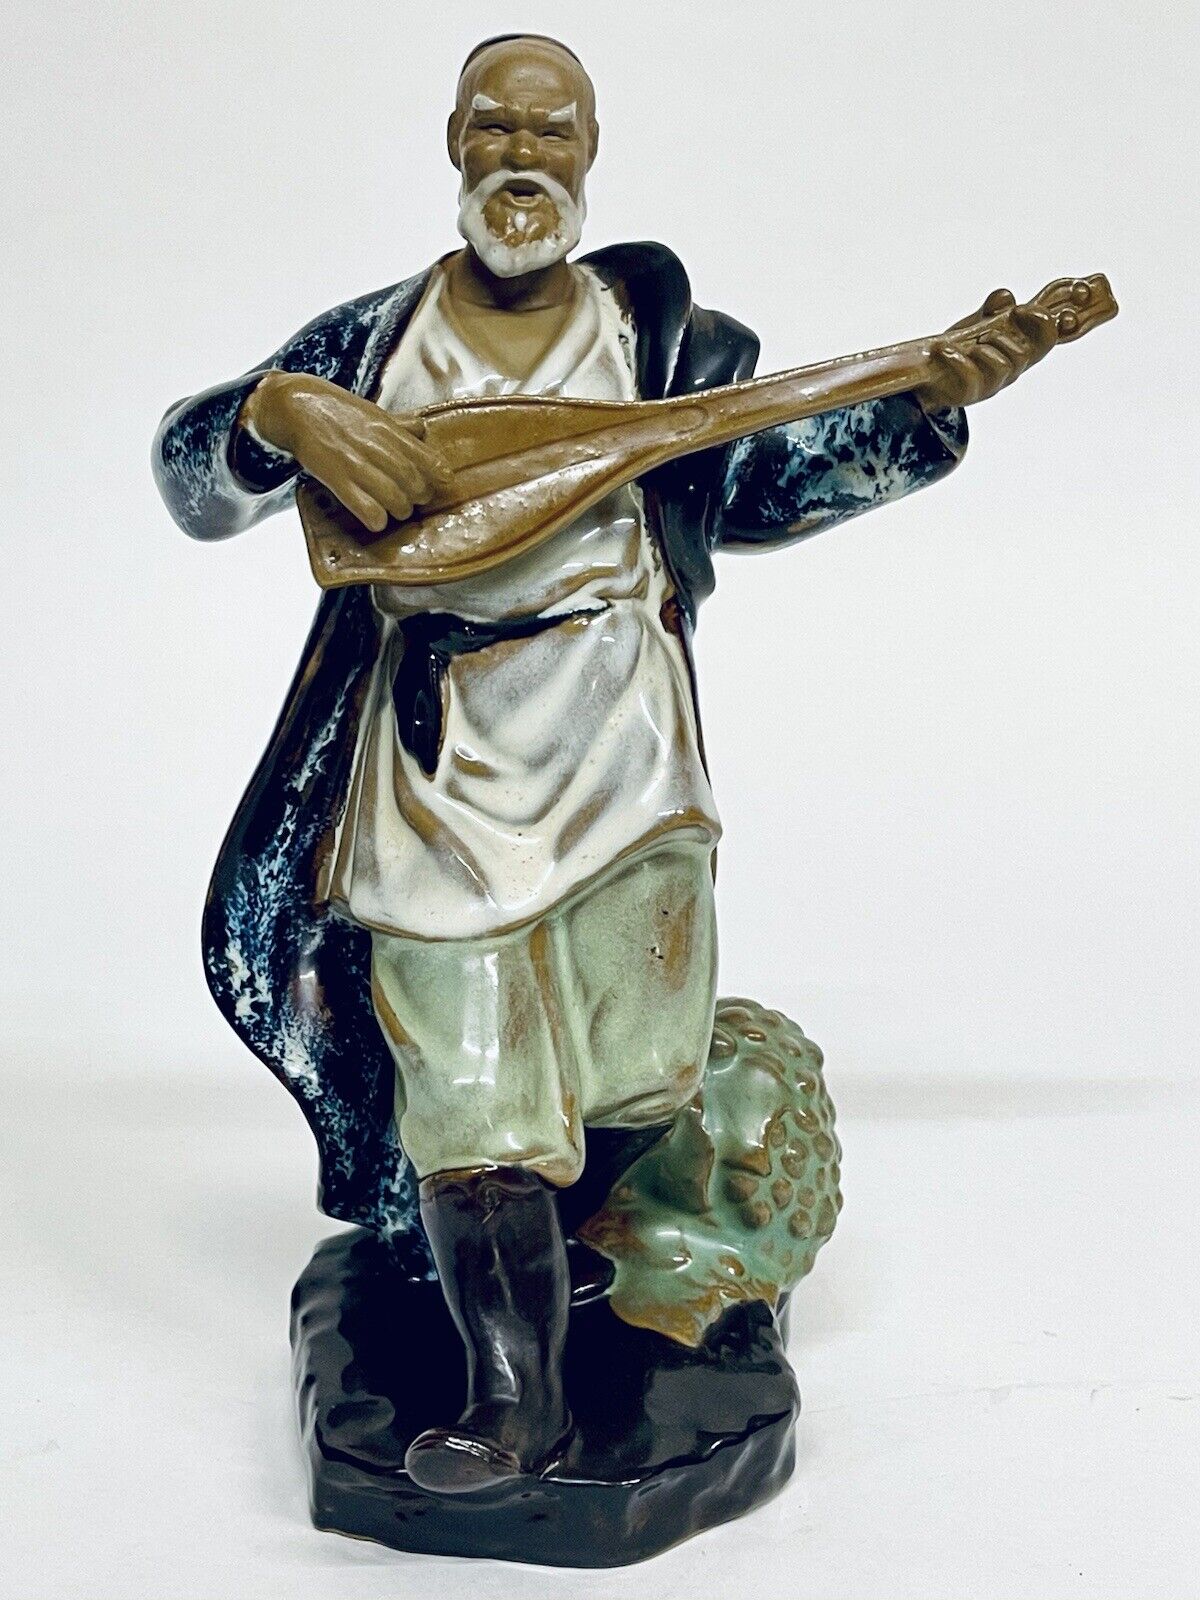 Marvelous Vintage Asian Street Musician Fine Porcelain Figurine